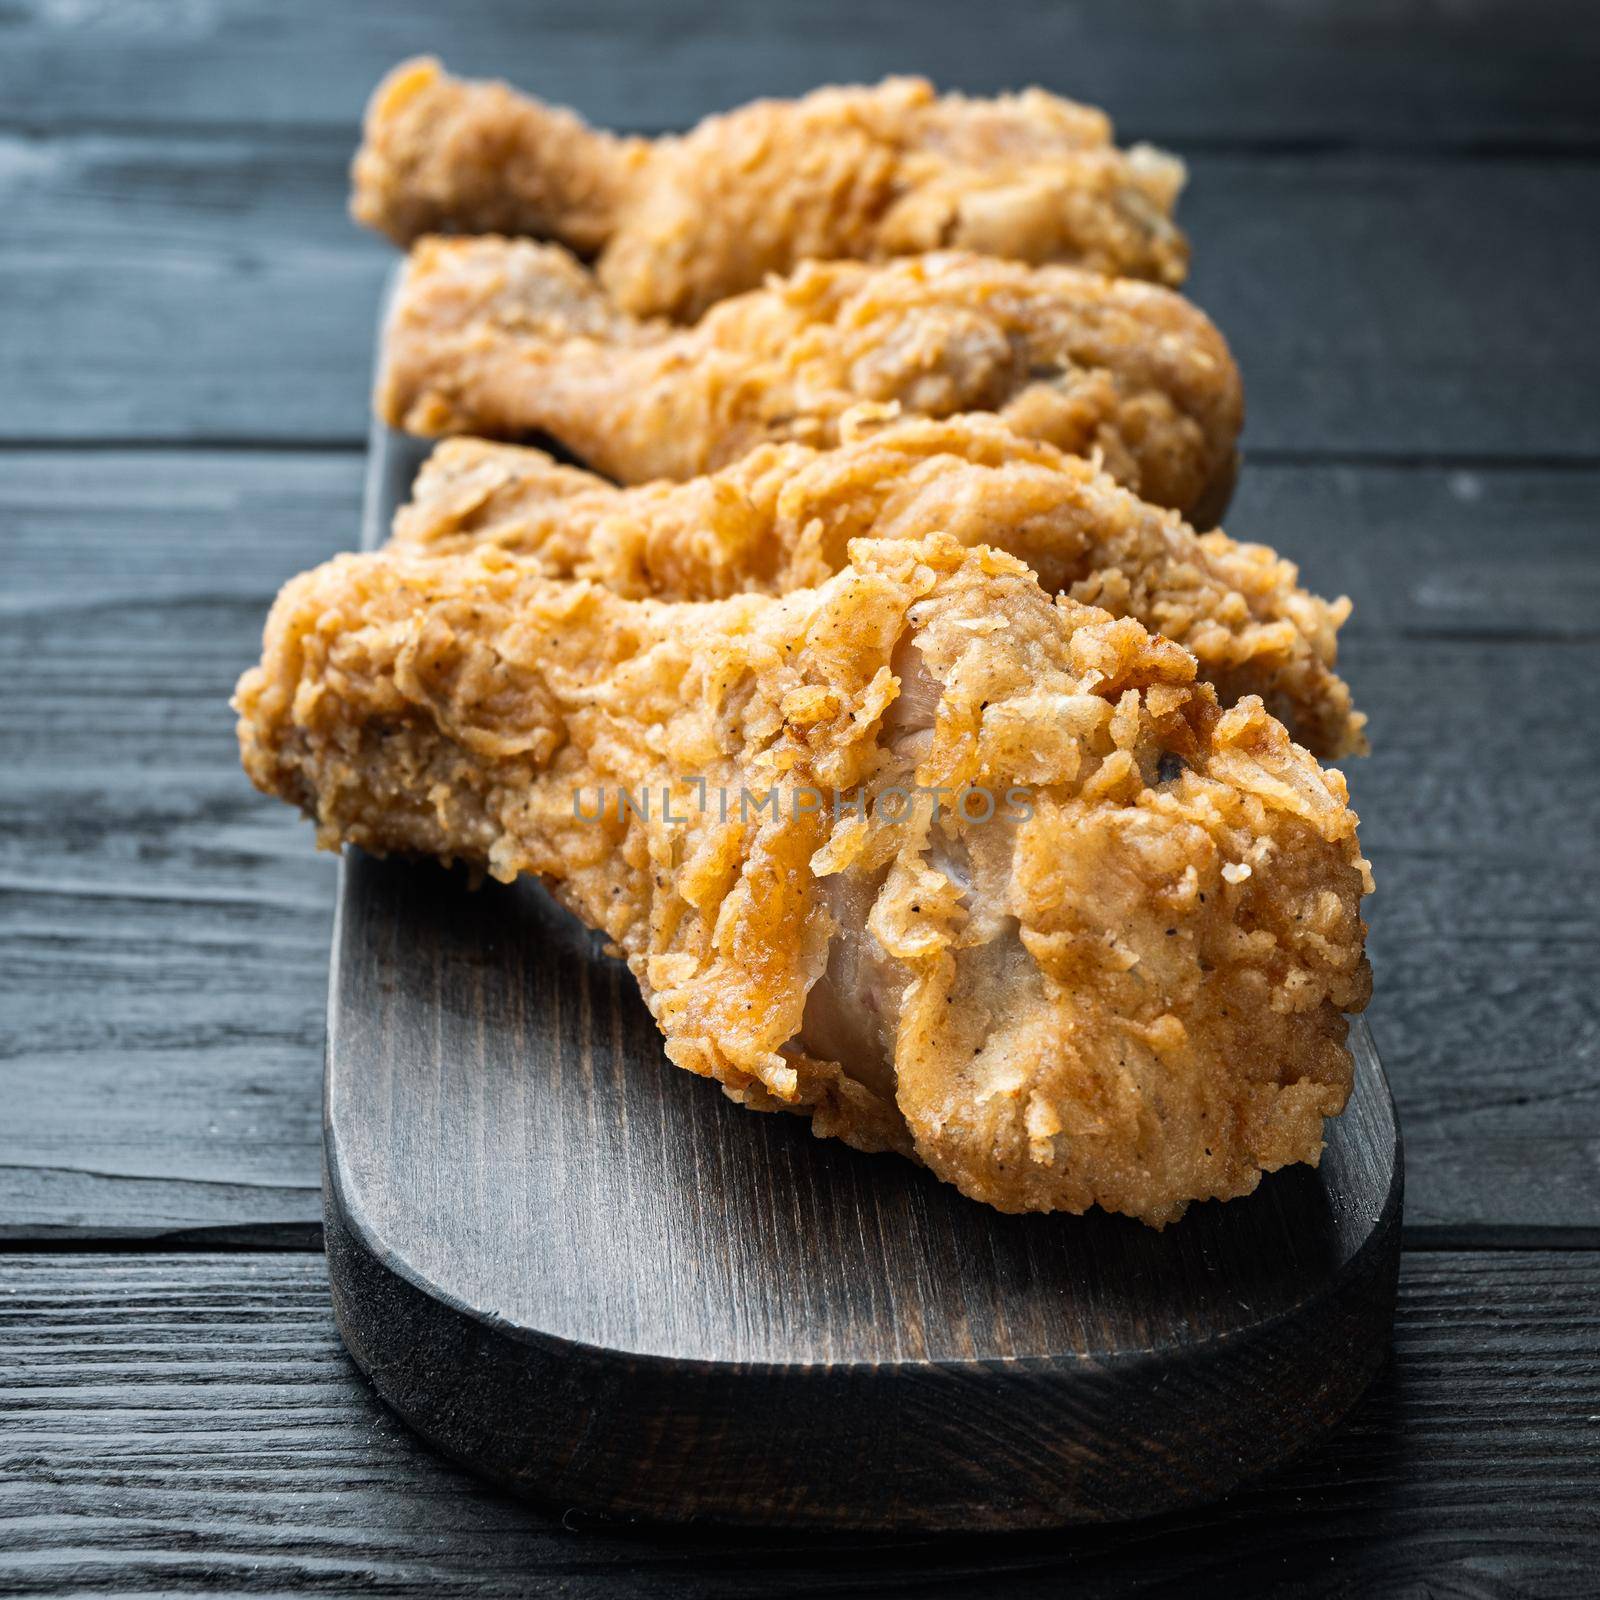 Crispy fried chicken on black wooden background by Ilianesolenyi